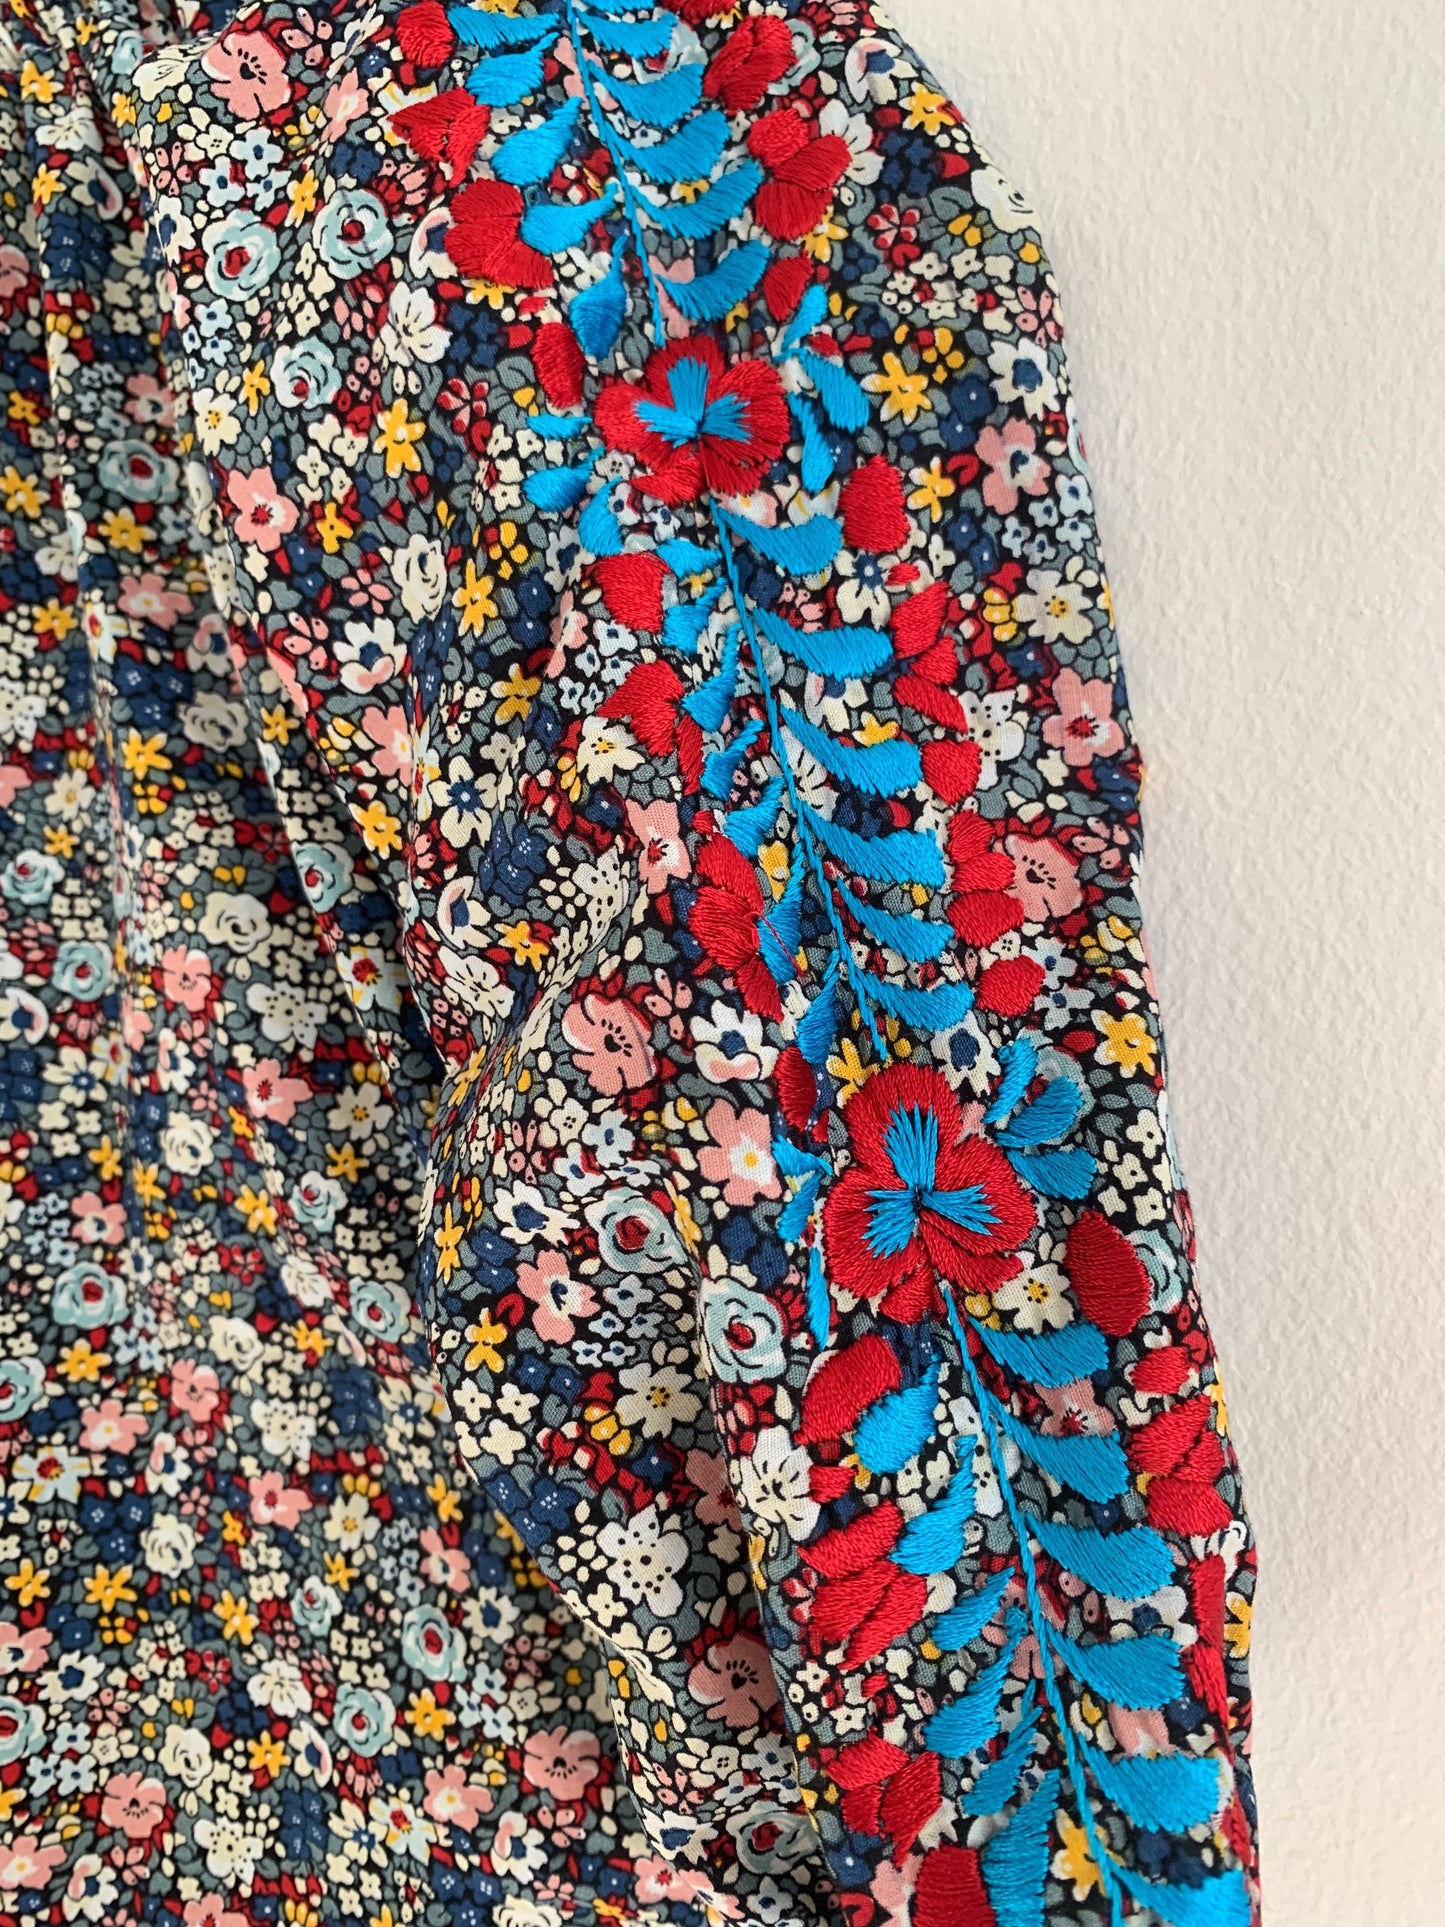 Embroidered raglan sleeve dress